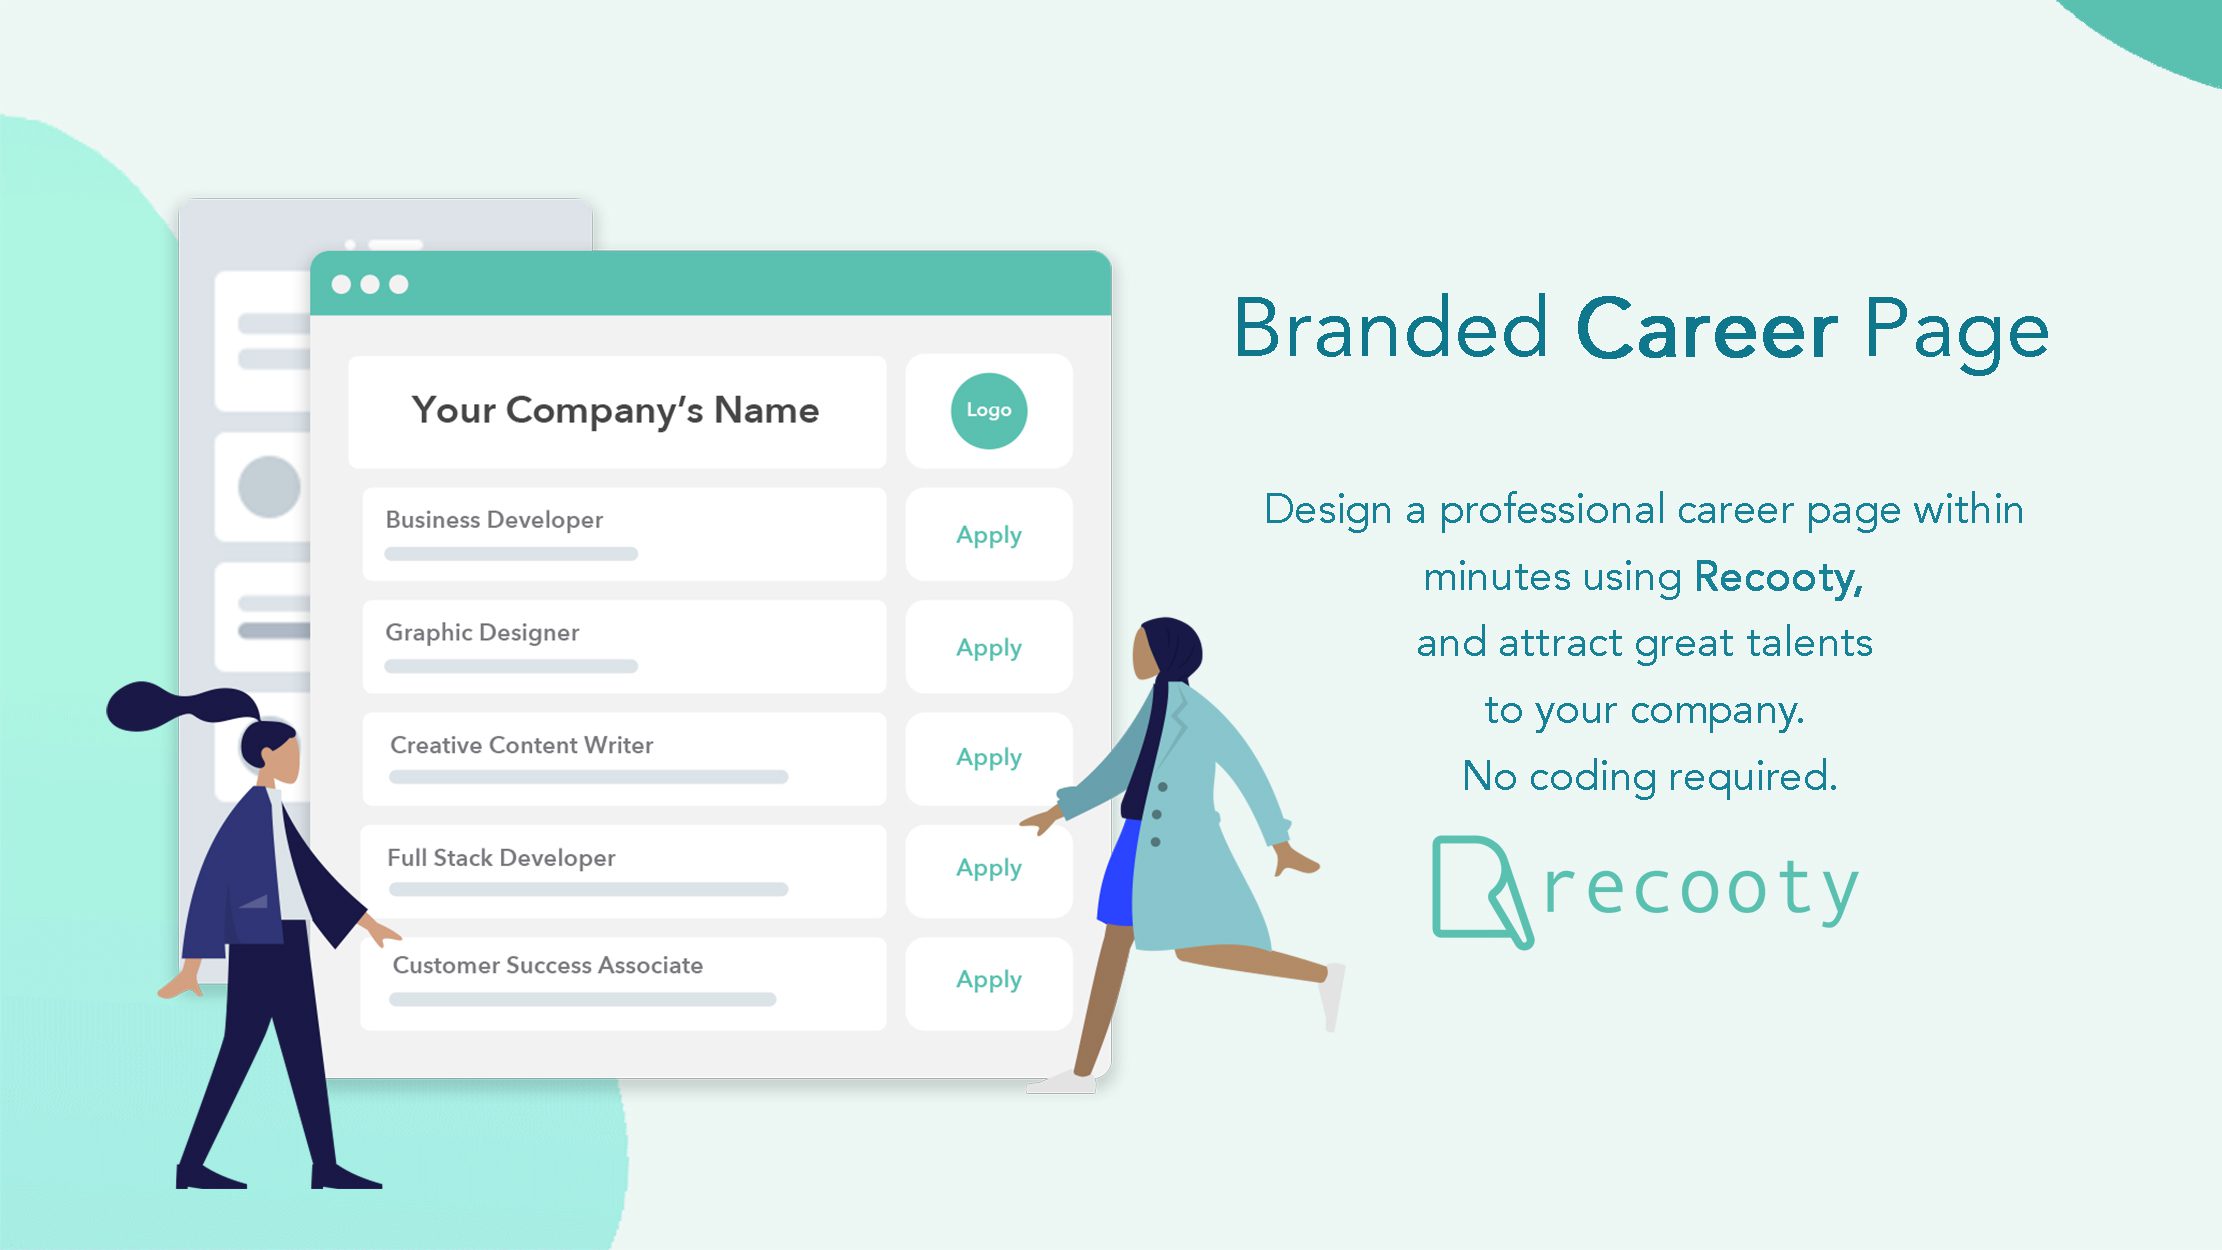 Branded Career Page